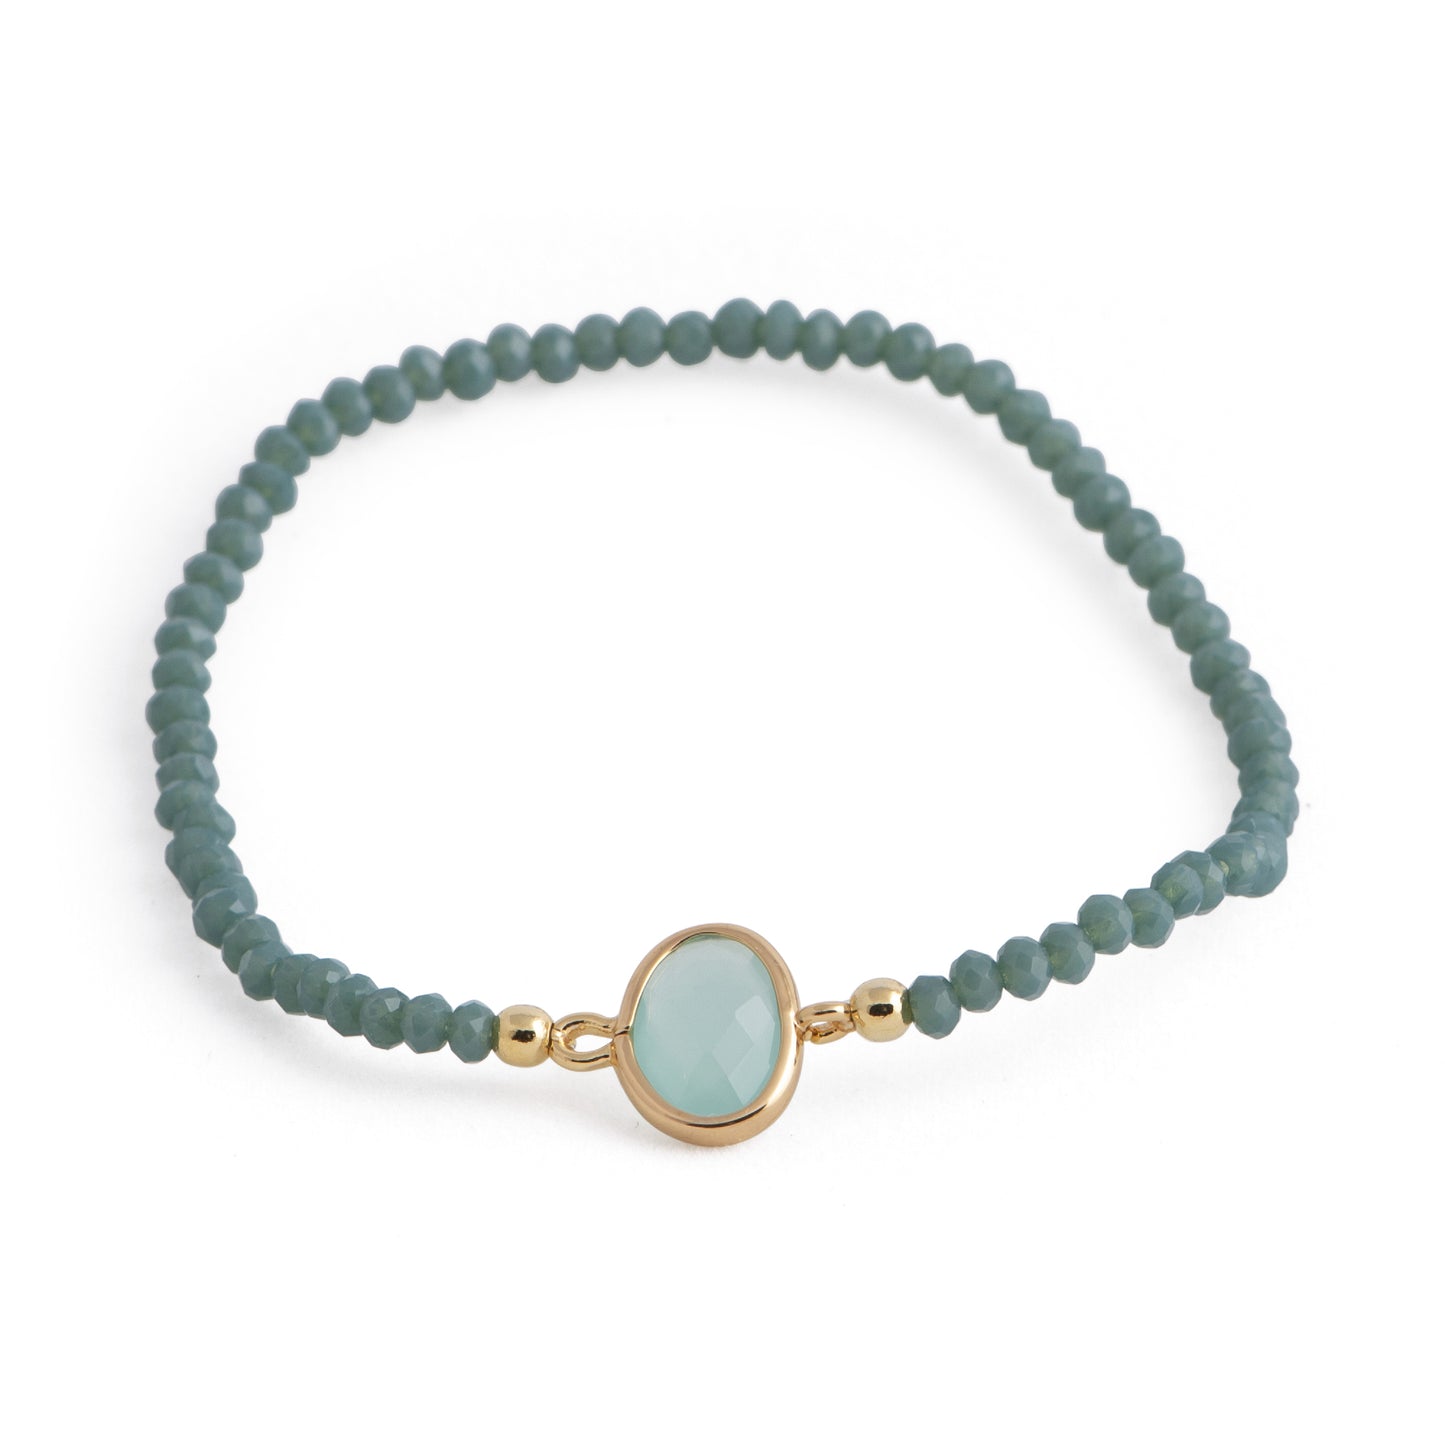 Lena - Crystal stretch bracelet (Green tone #2)